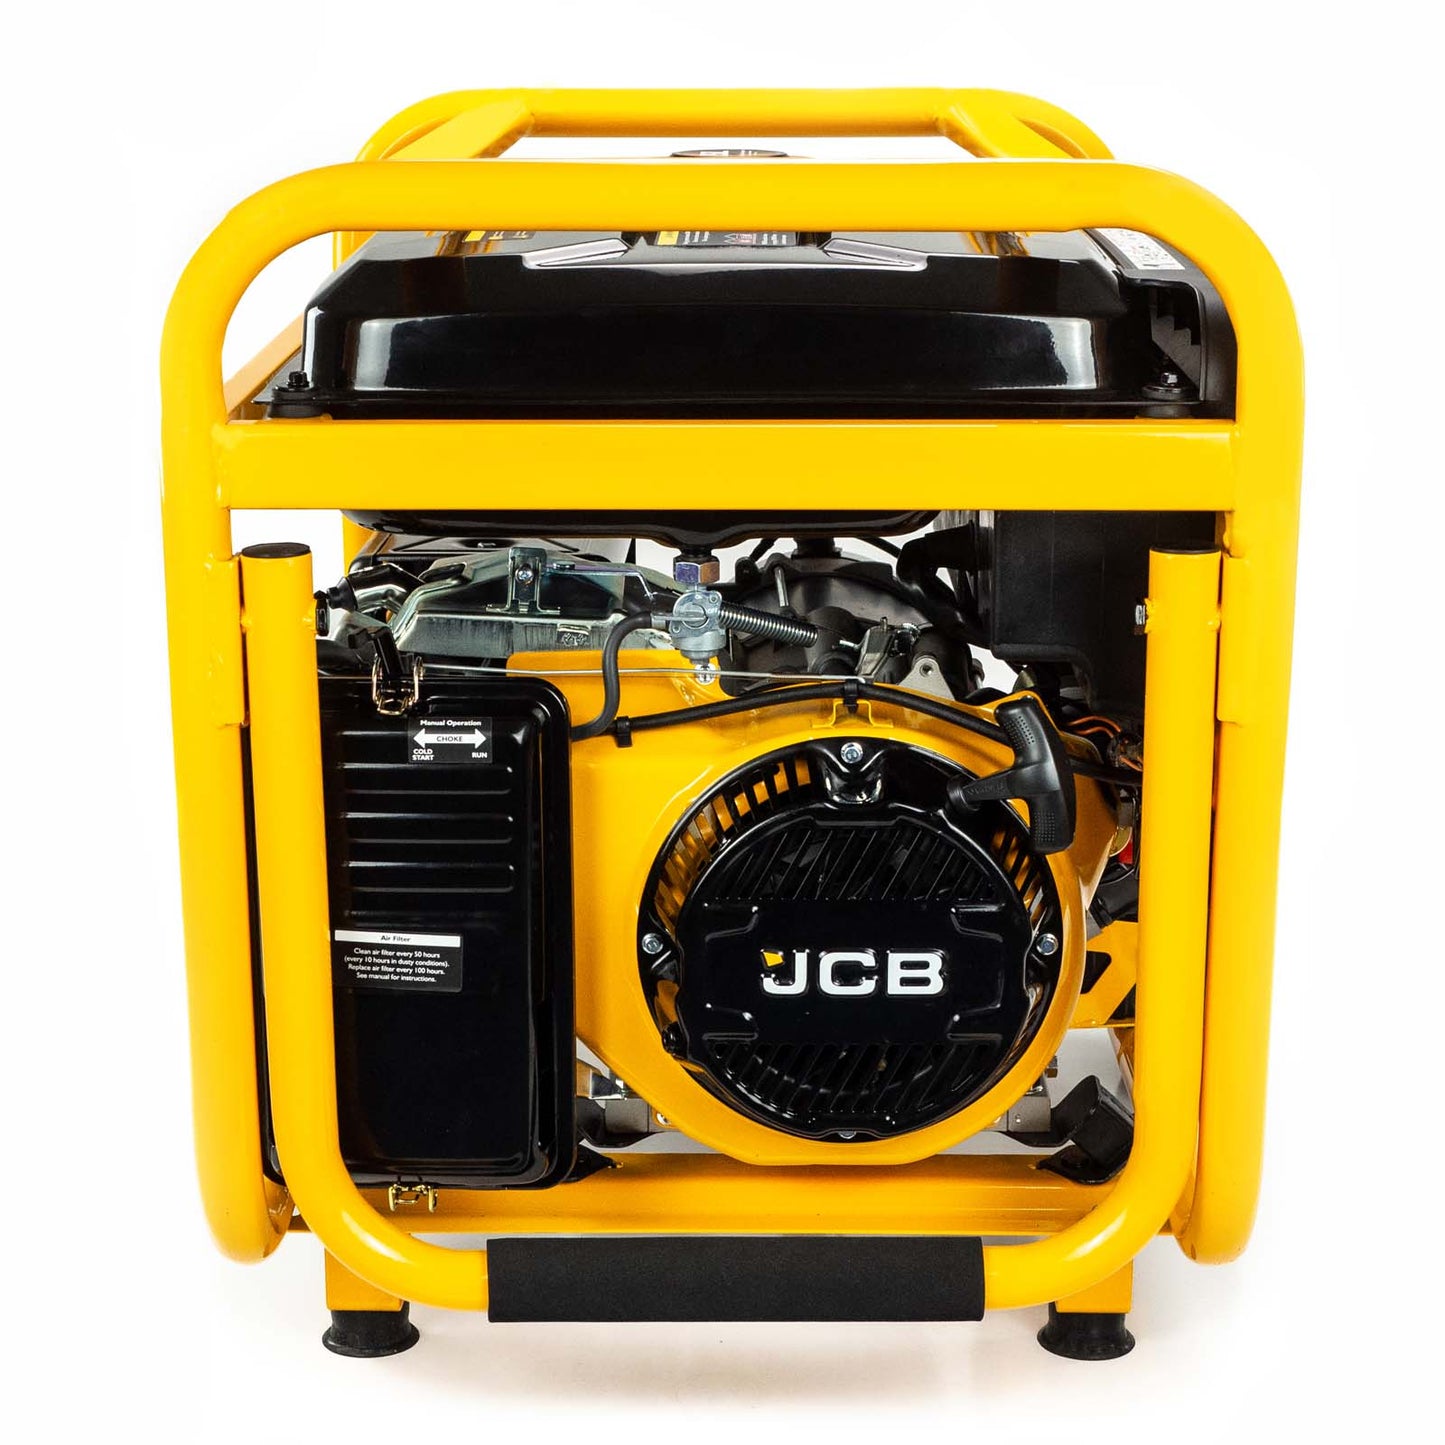 JCB Recoil & Electric Start JCB Engine Petrol Site Generator475cc JCB-G8000PE